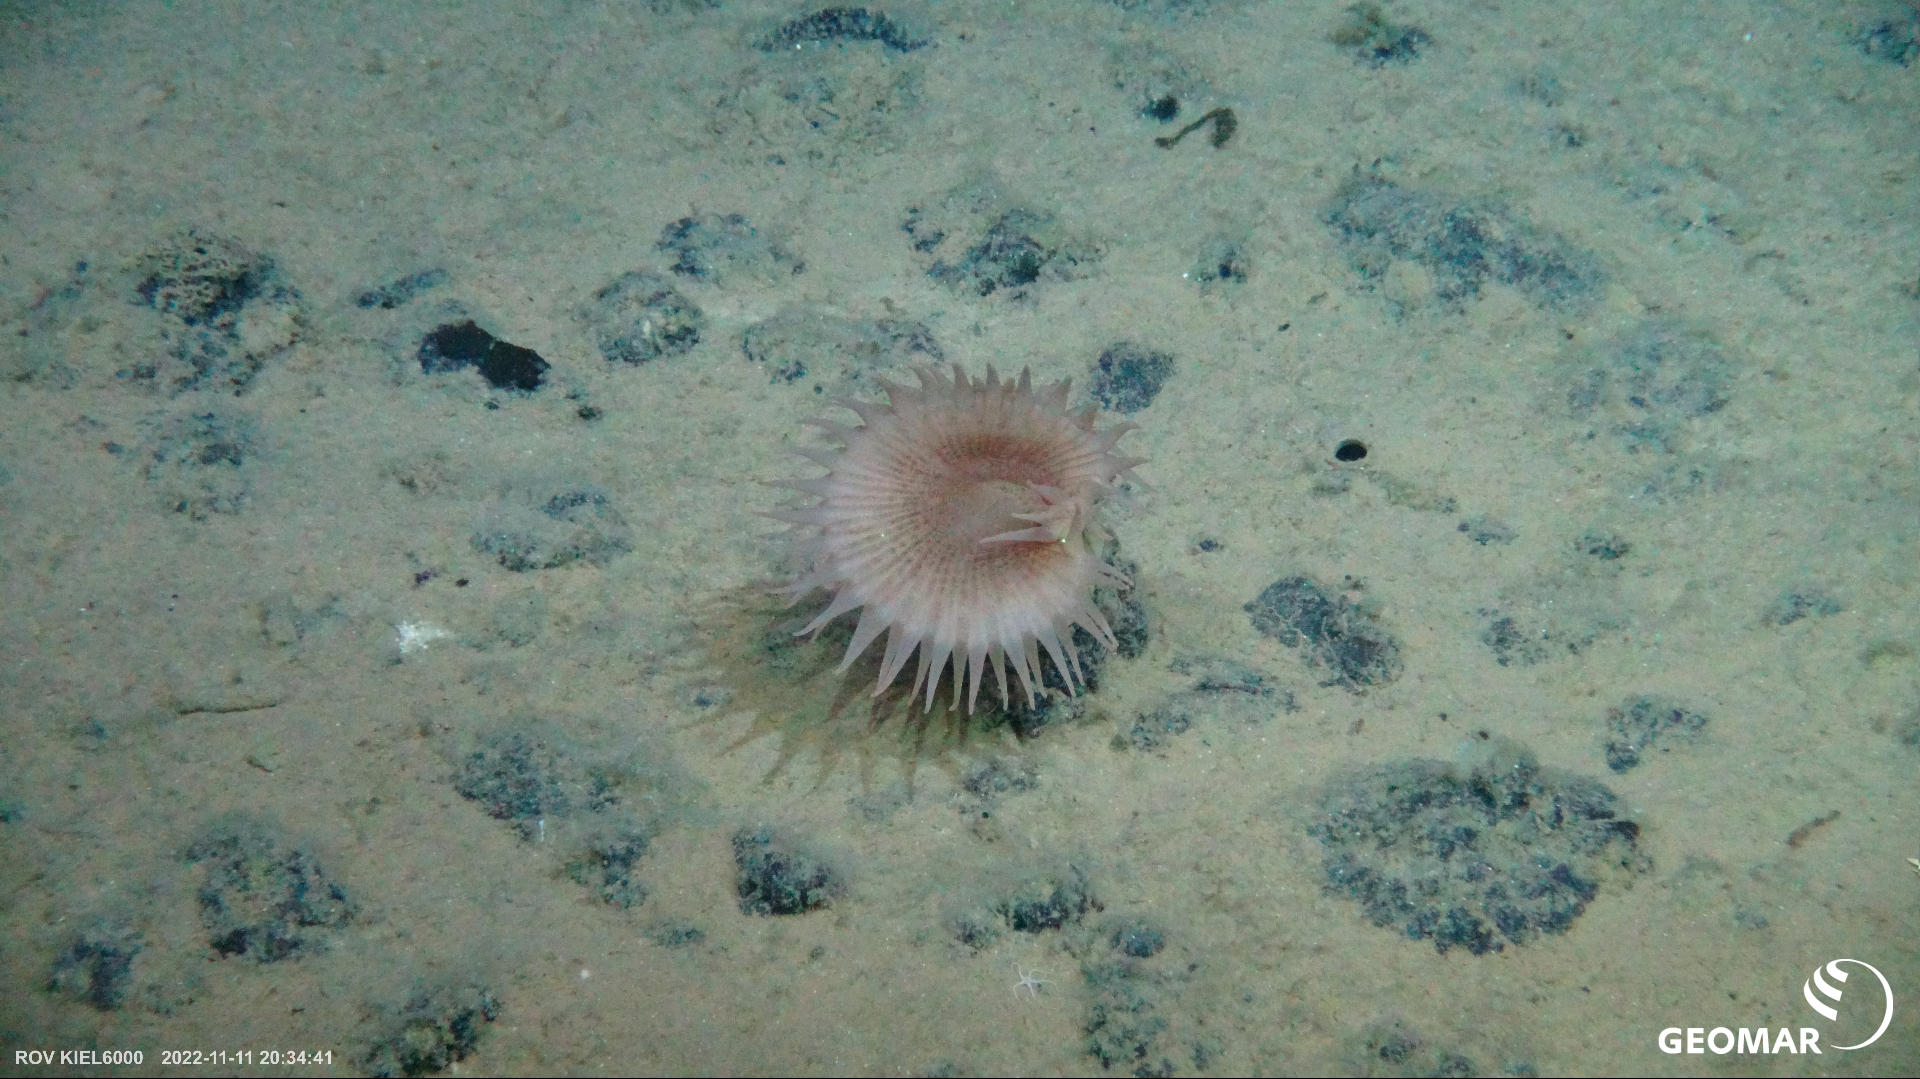 Anemone on a nodule, at 4.200 meters depth. From the blog of Sabine Gollner - see below. (photo by GEOMAR)